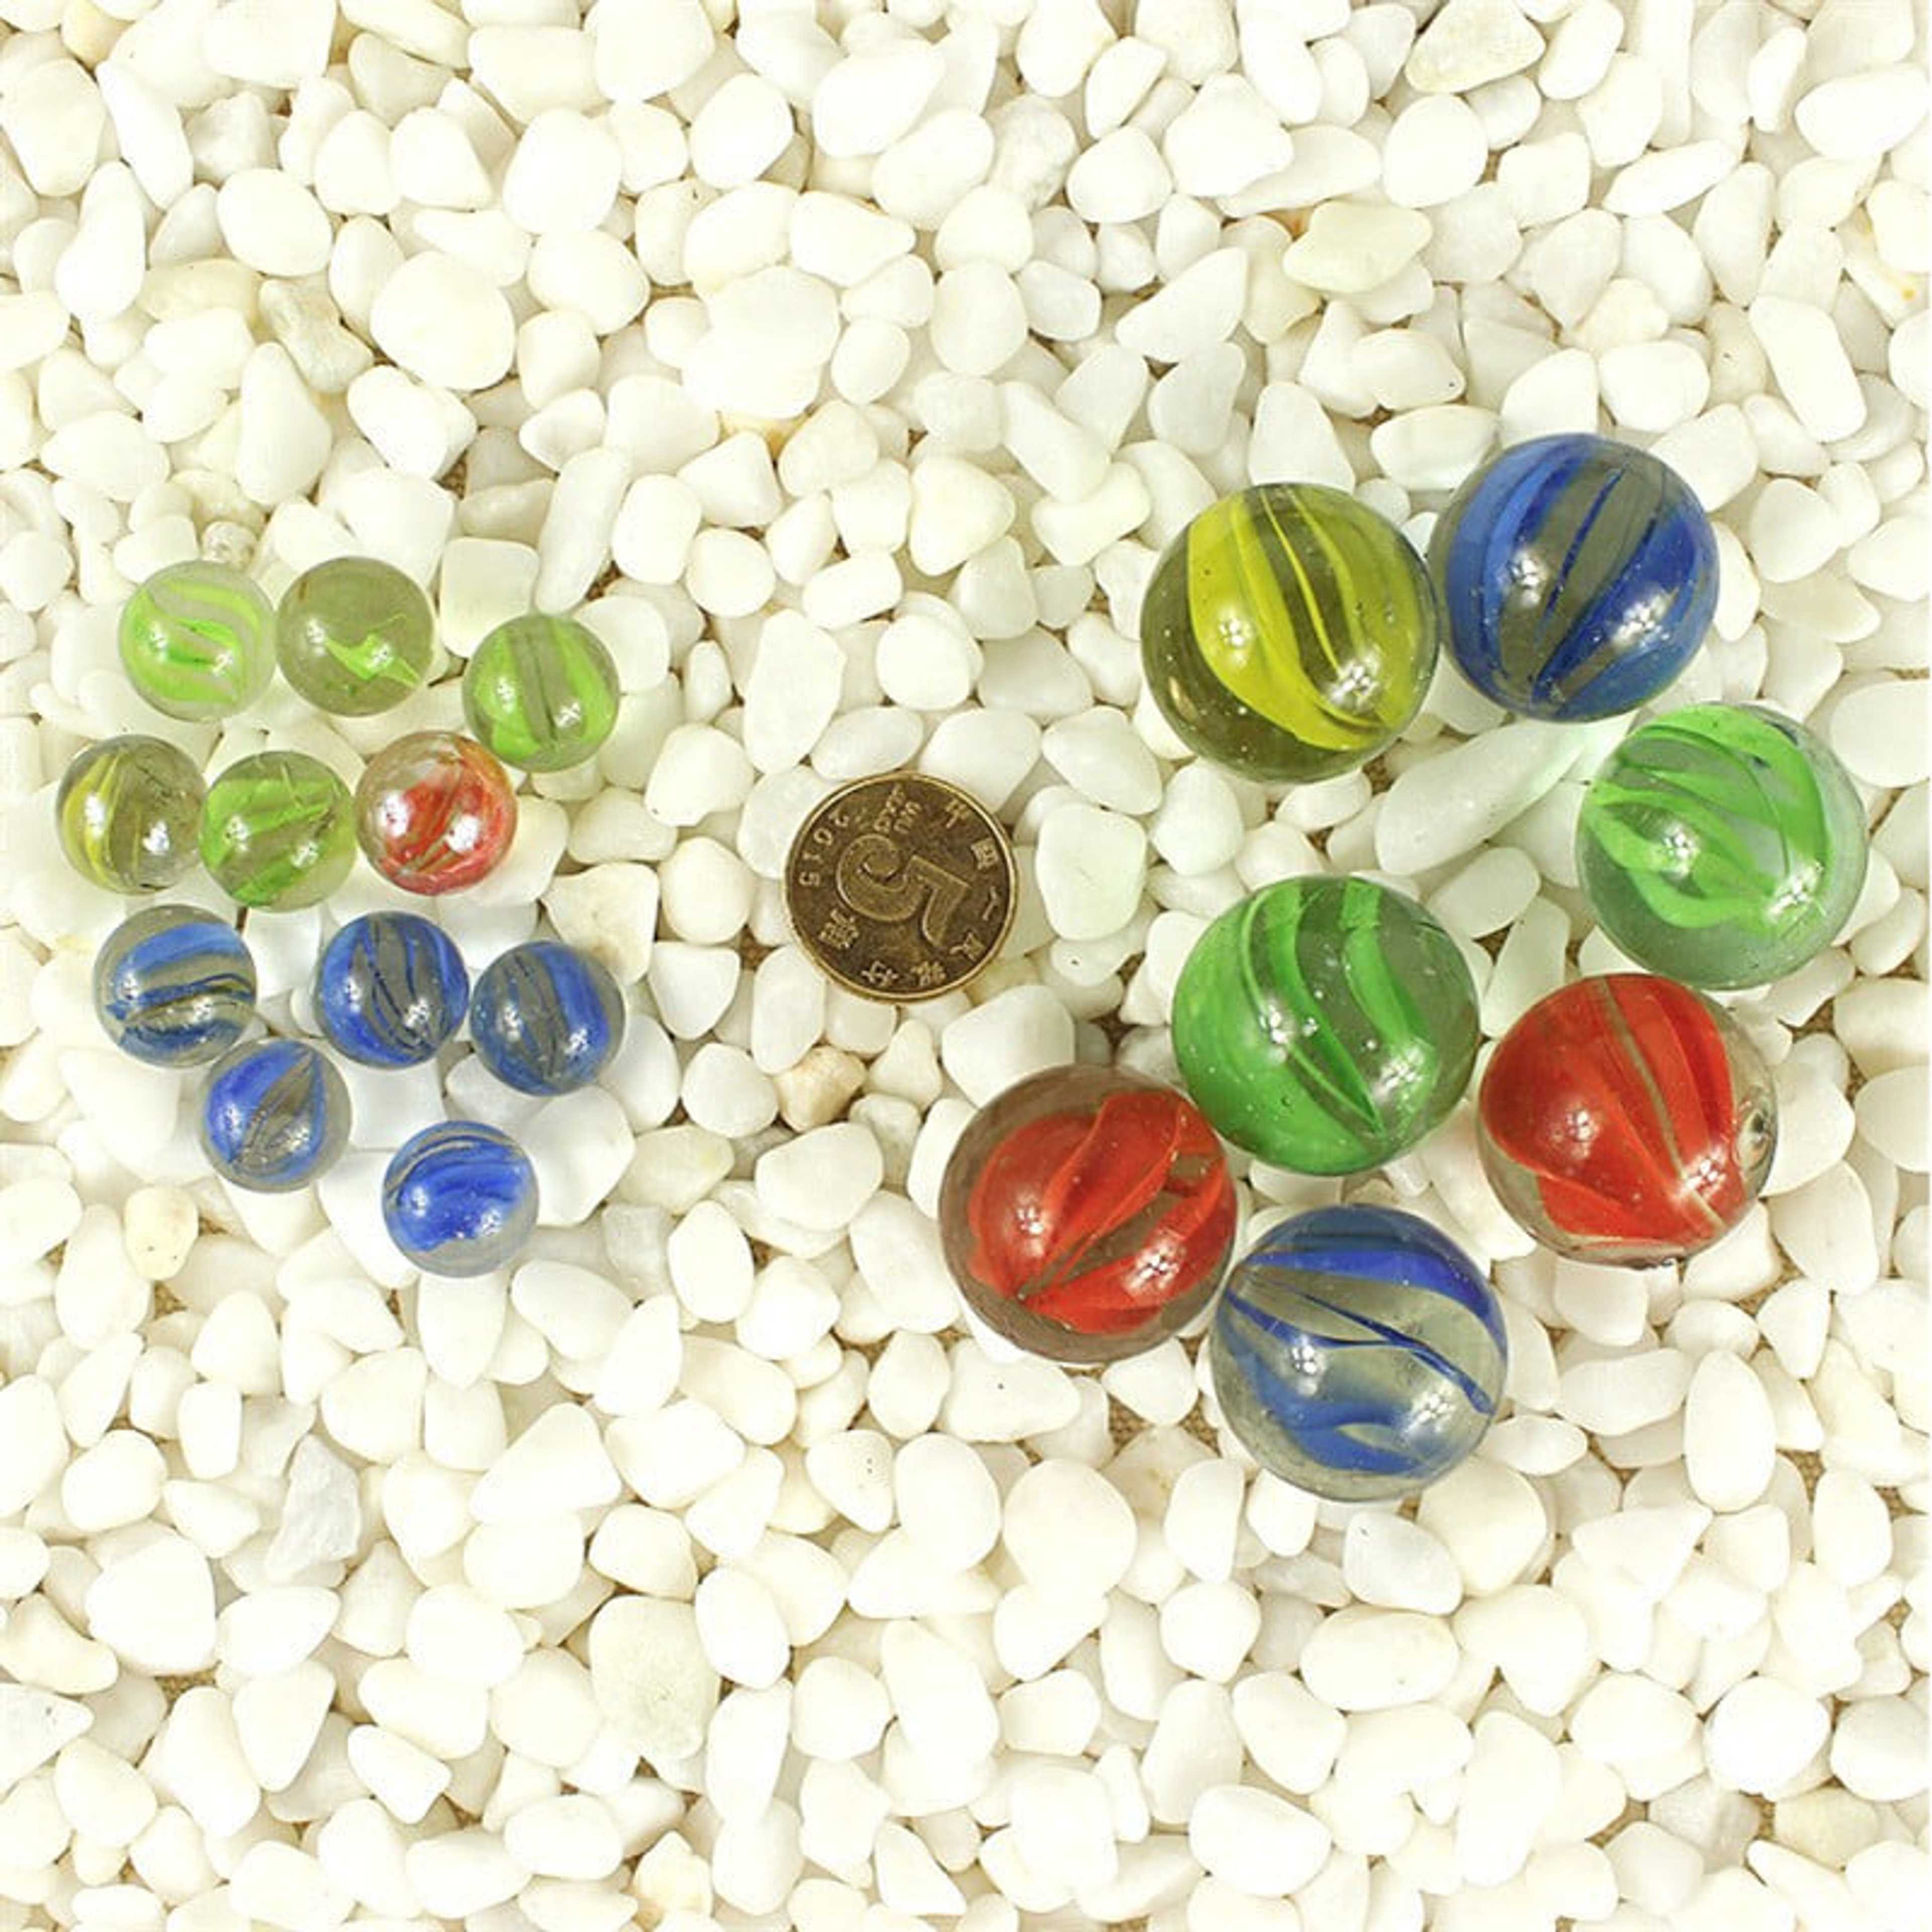 200 PCS Of Glass Balls 12mm Kids Playing Games Pots And Aquarium Decorative Marbles Beads